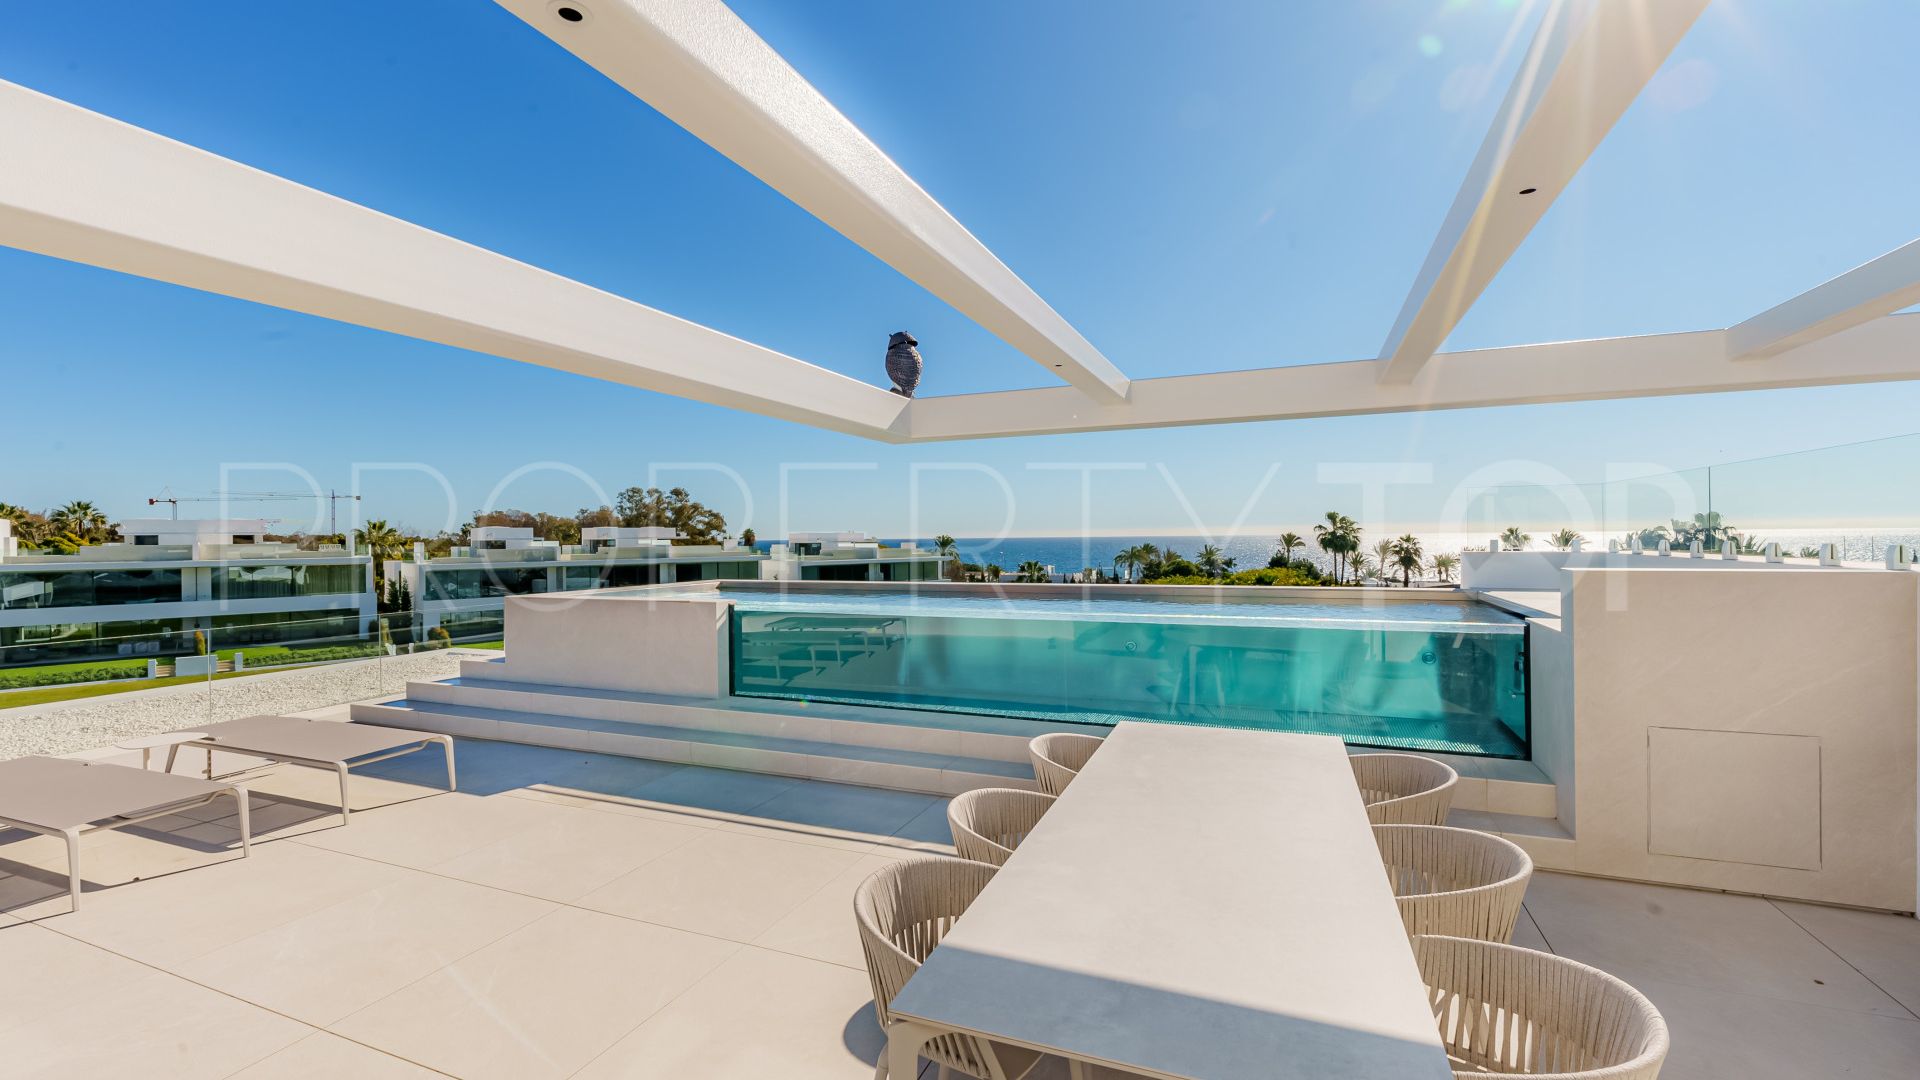 5 bedrooms villa in Coral Beach for sale